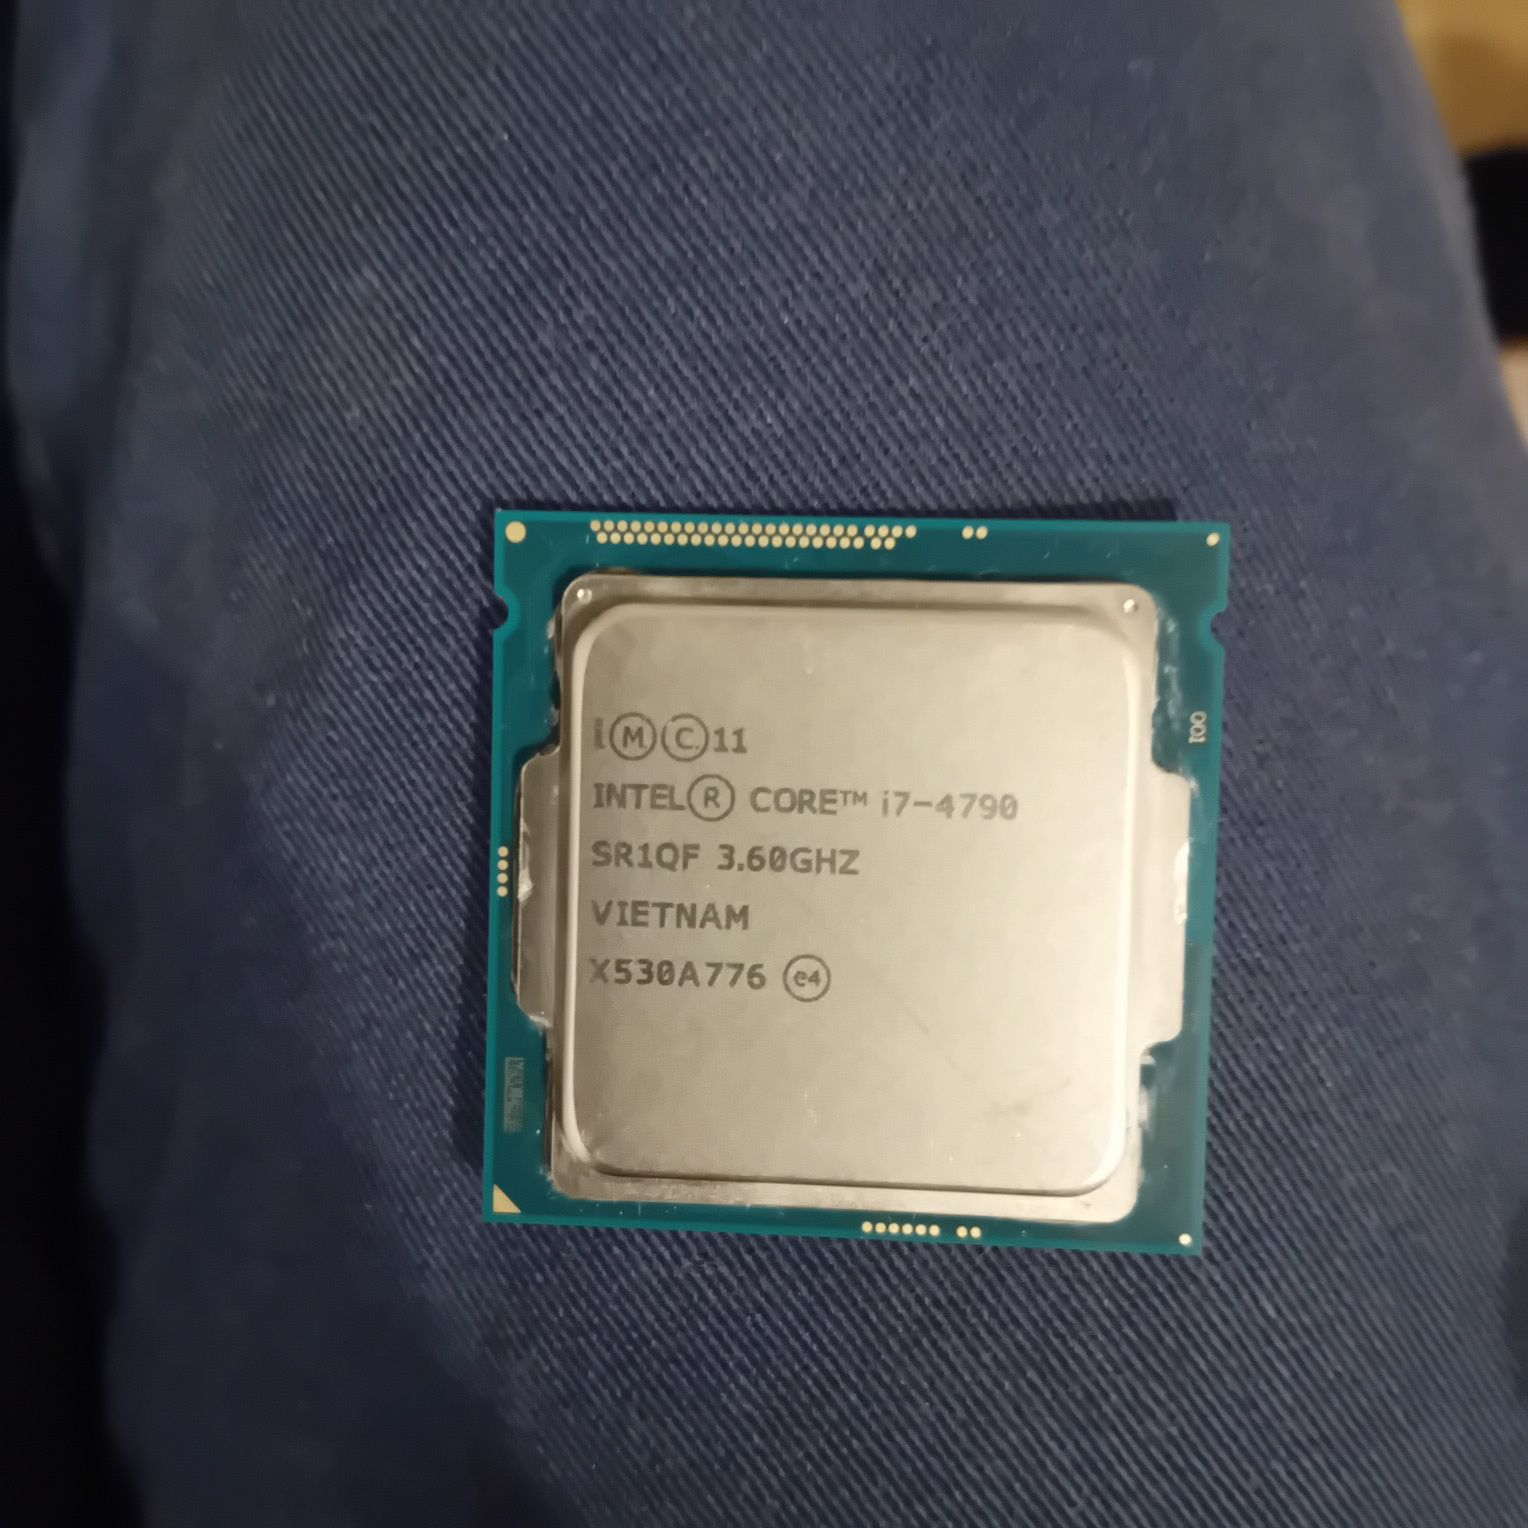 Intel core i7-4790 SR1QF 3.60GHZ